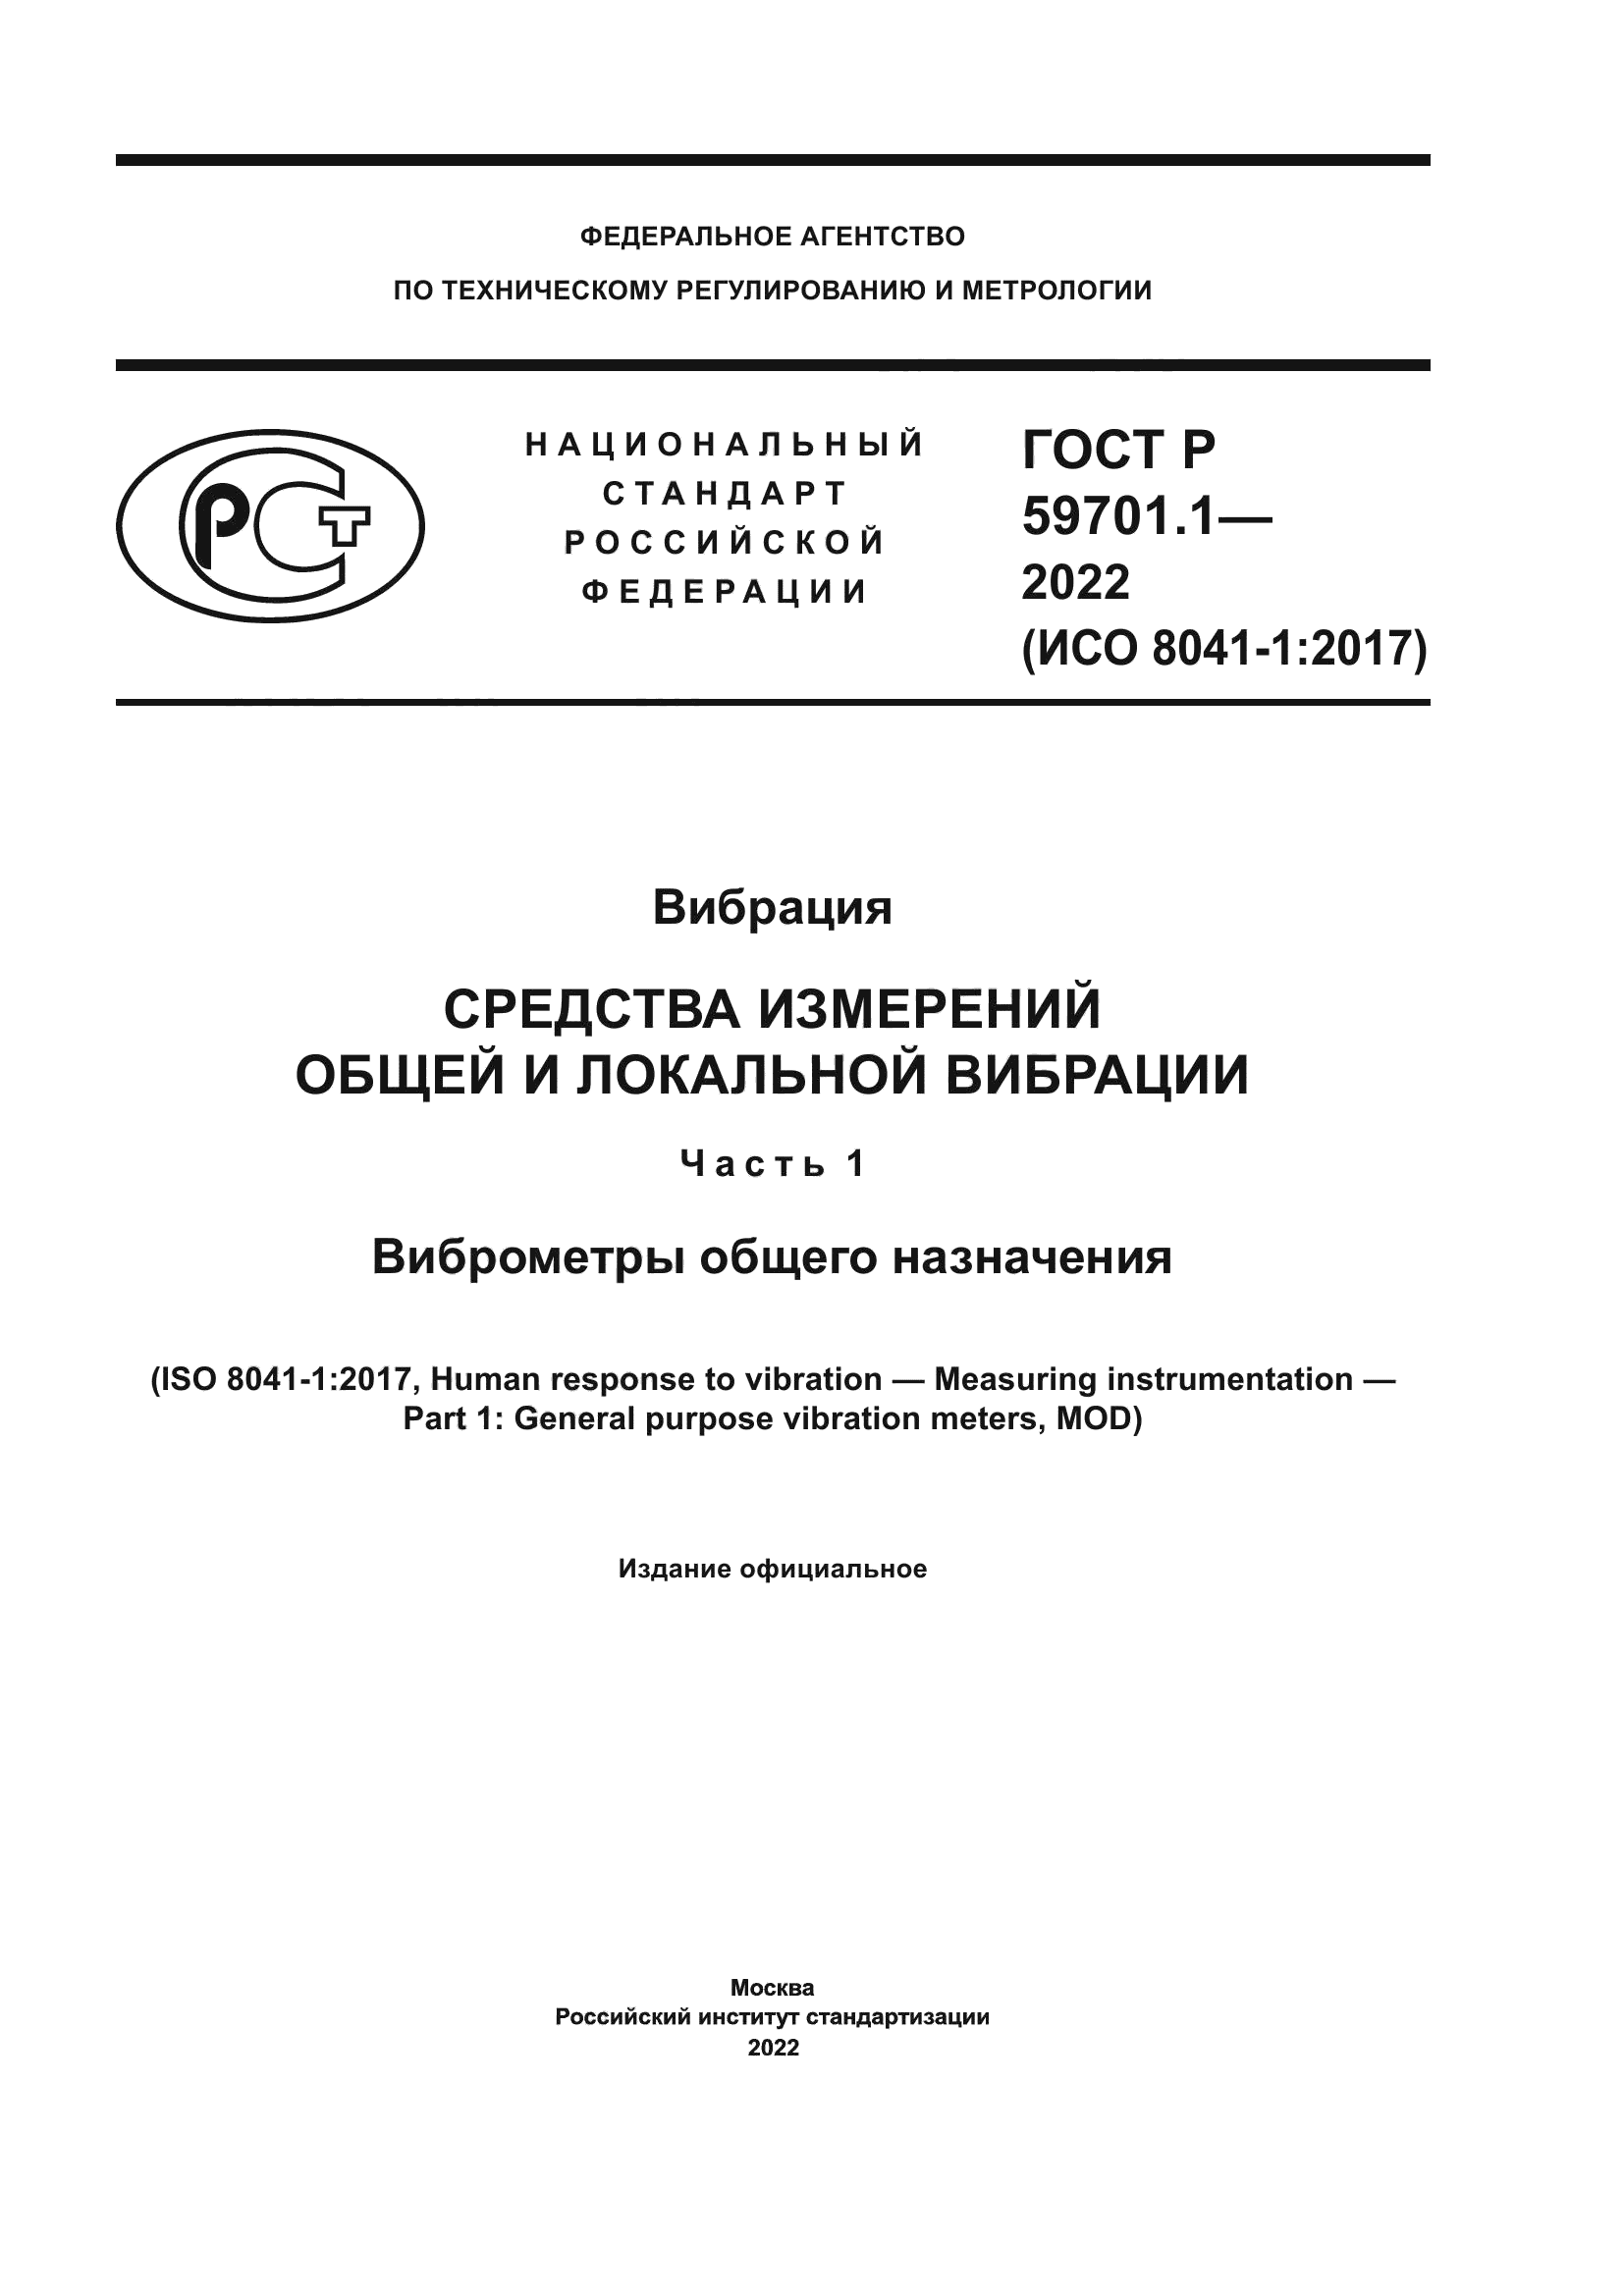 ГОСТ Р 59701.1-2022